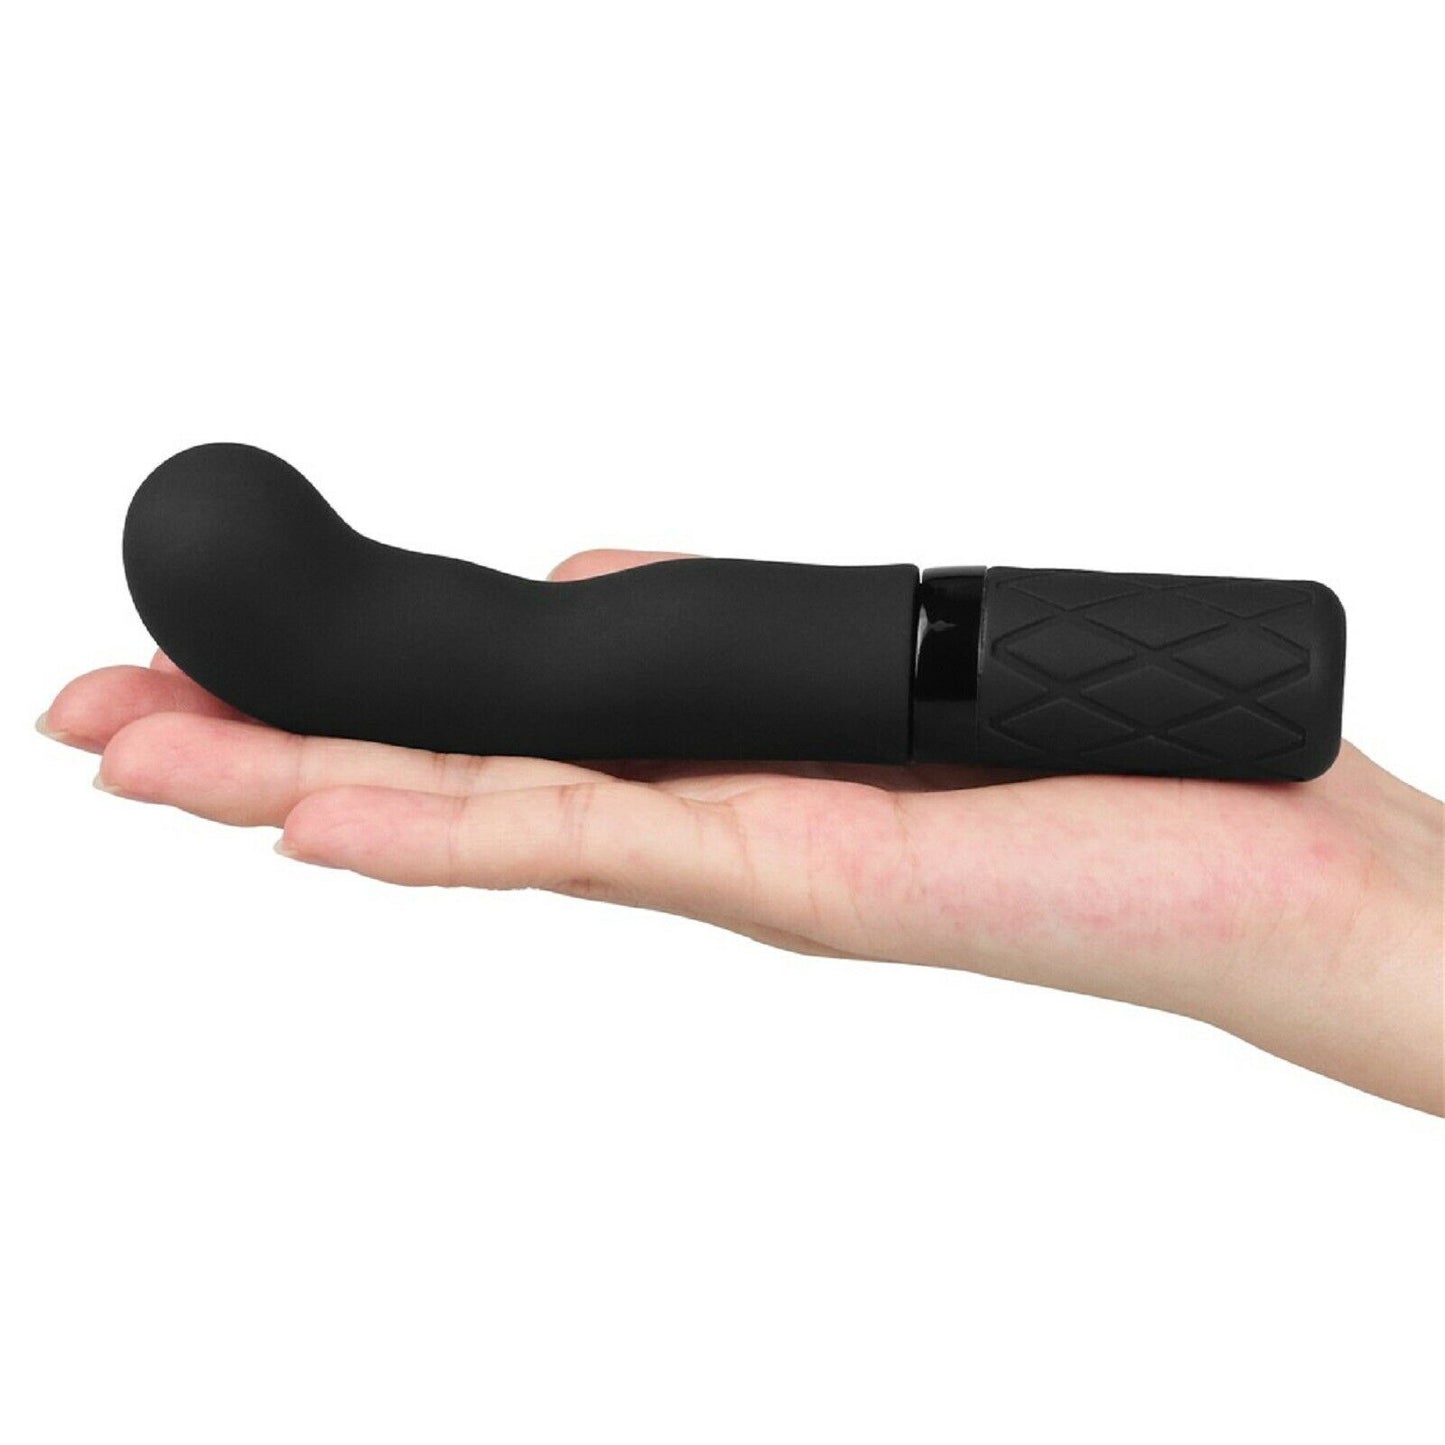 Rechargeable Vibrator G Spot Dildo Female Clit Vibe Stimulator Wand Sex Toy New